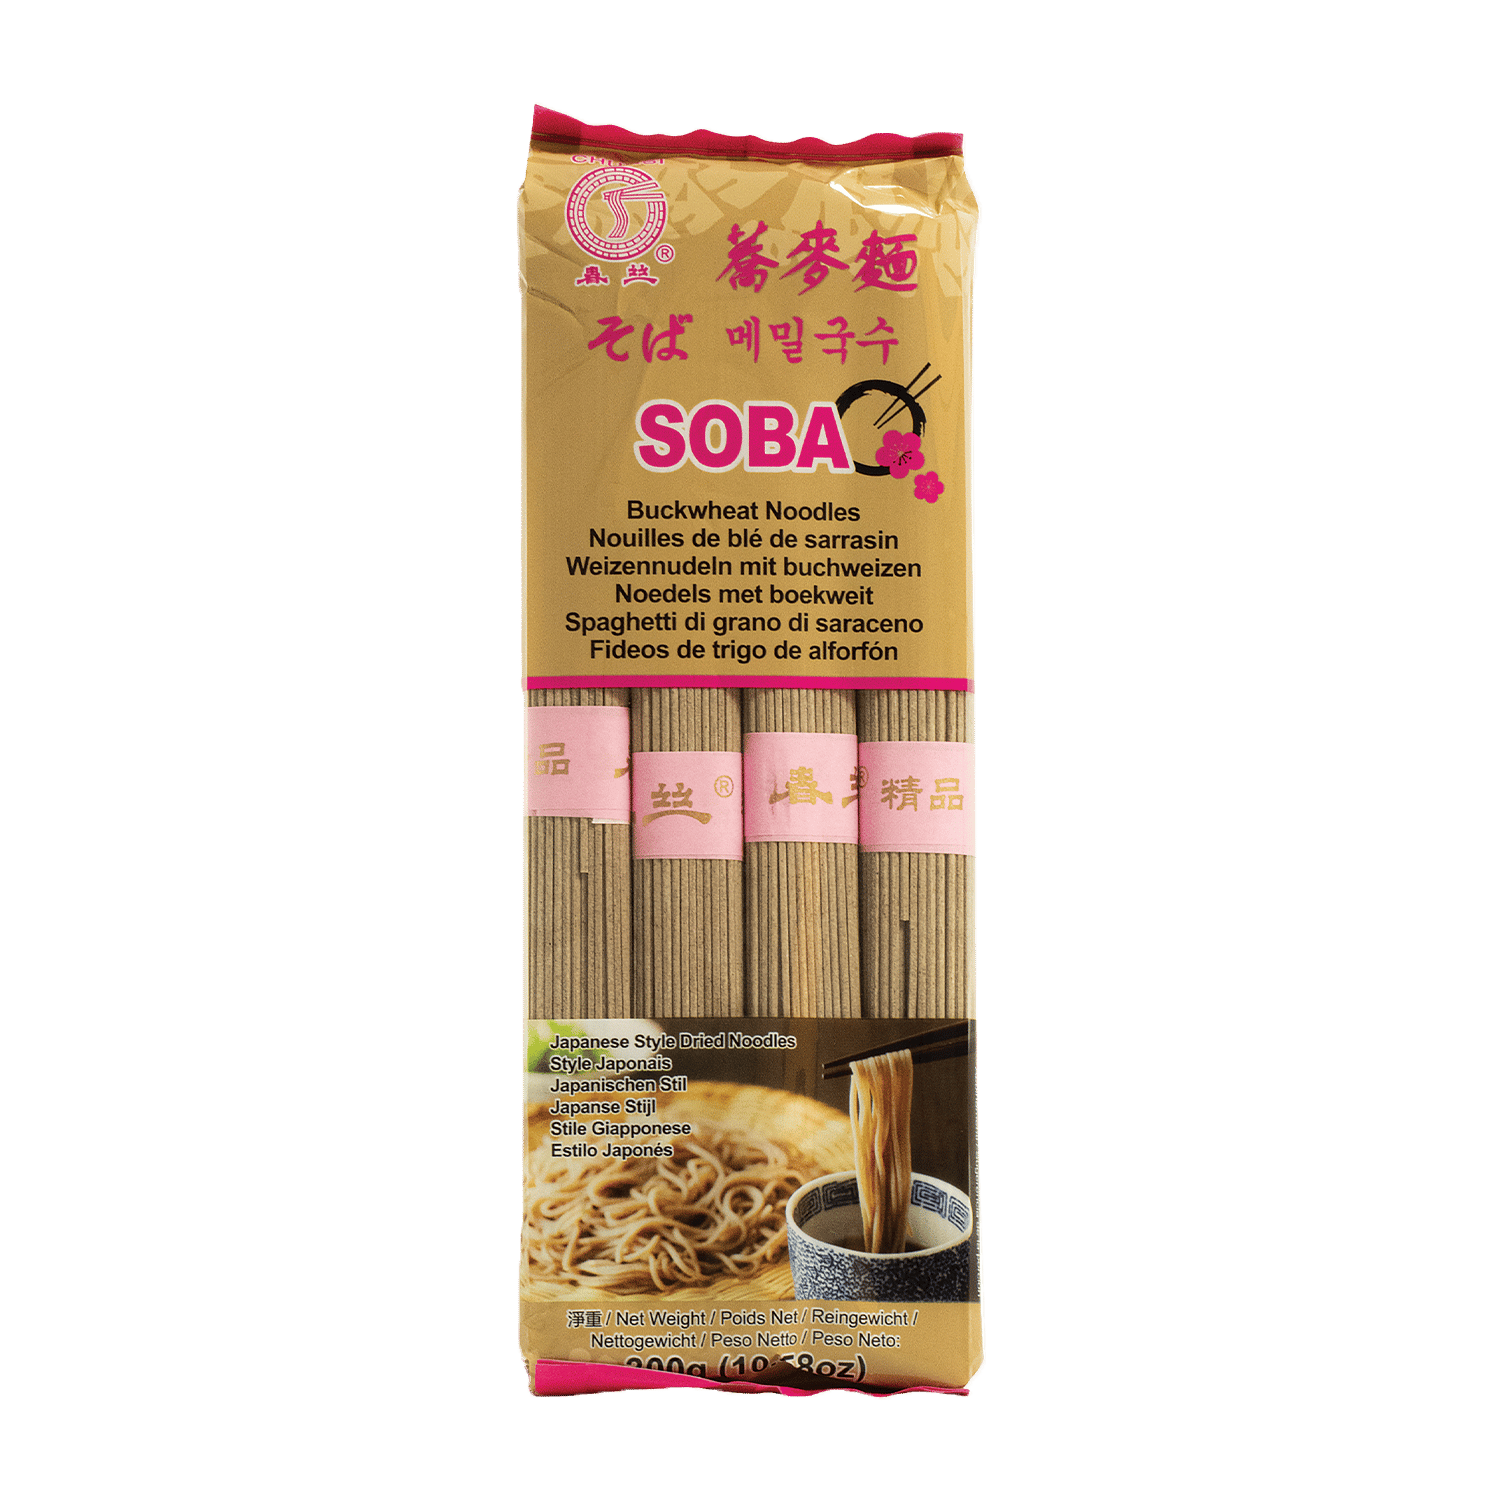 Buckwheat Noodles, 300g